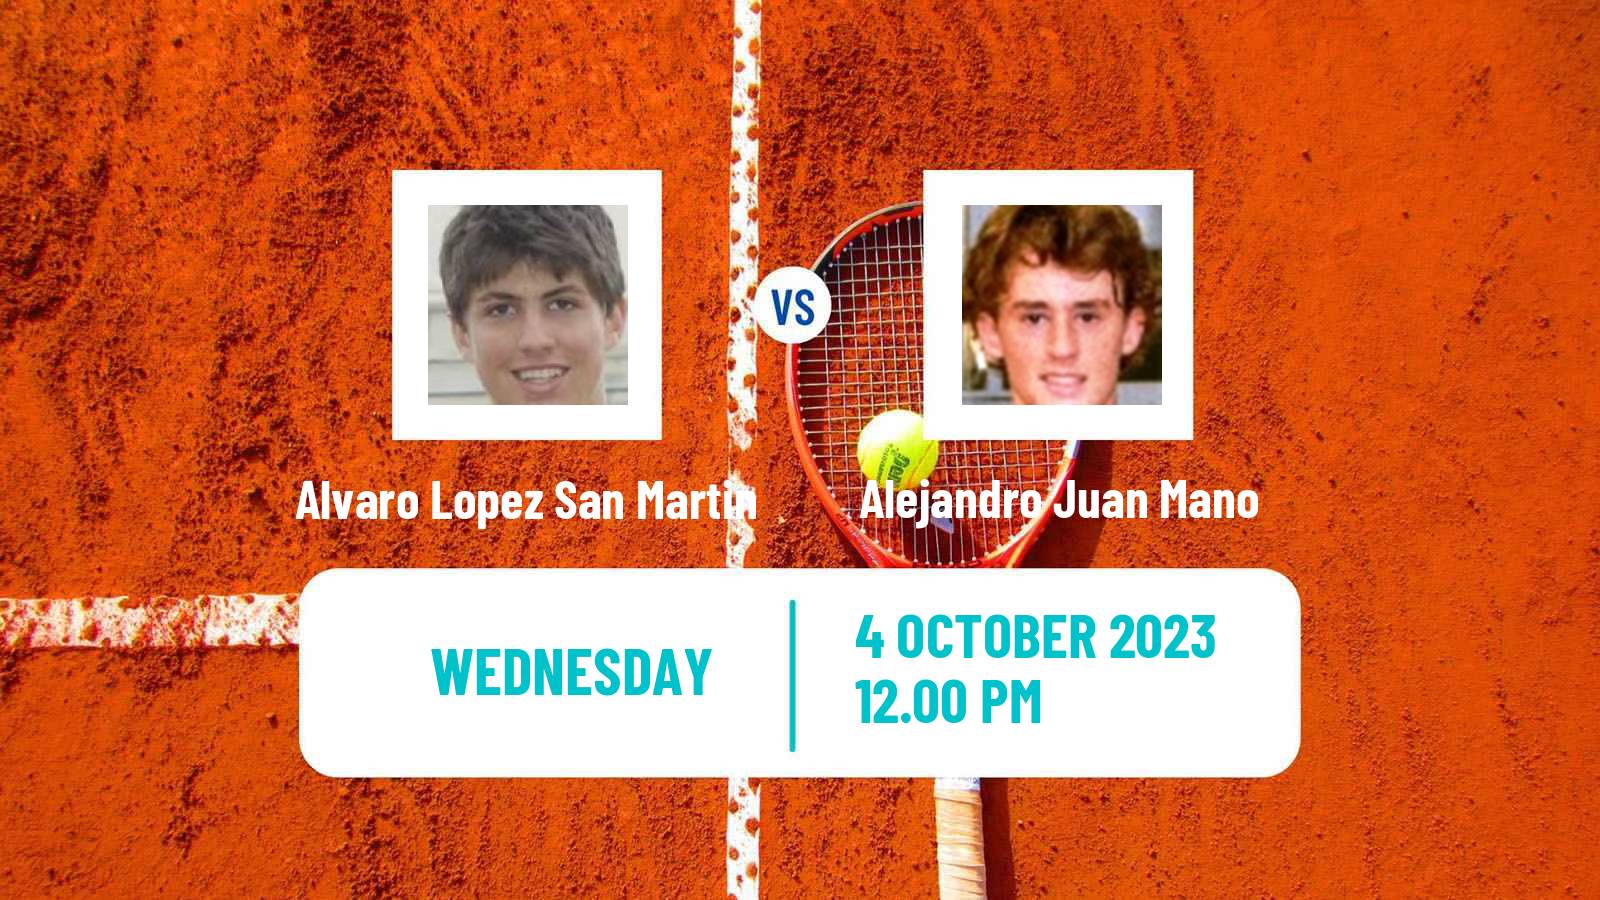 Tennis ITF M25 Zaragoza Men Alvaro Lopez San Martin - Alejandro Juan Mano